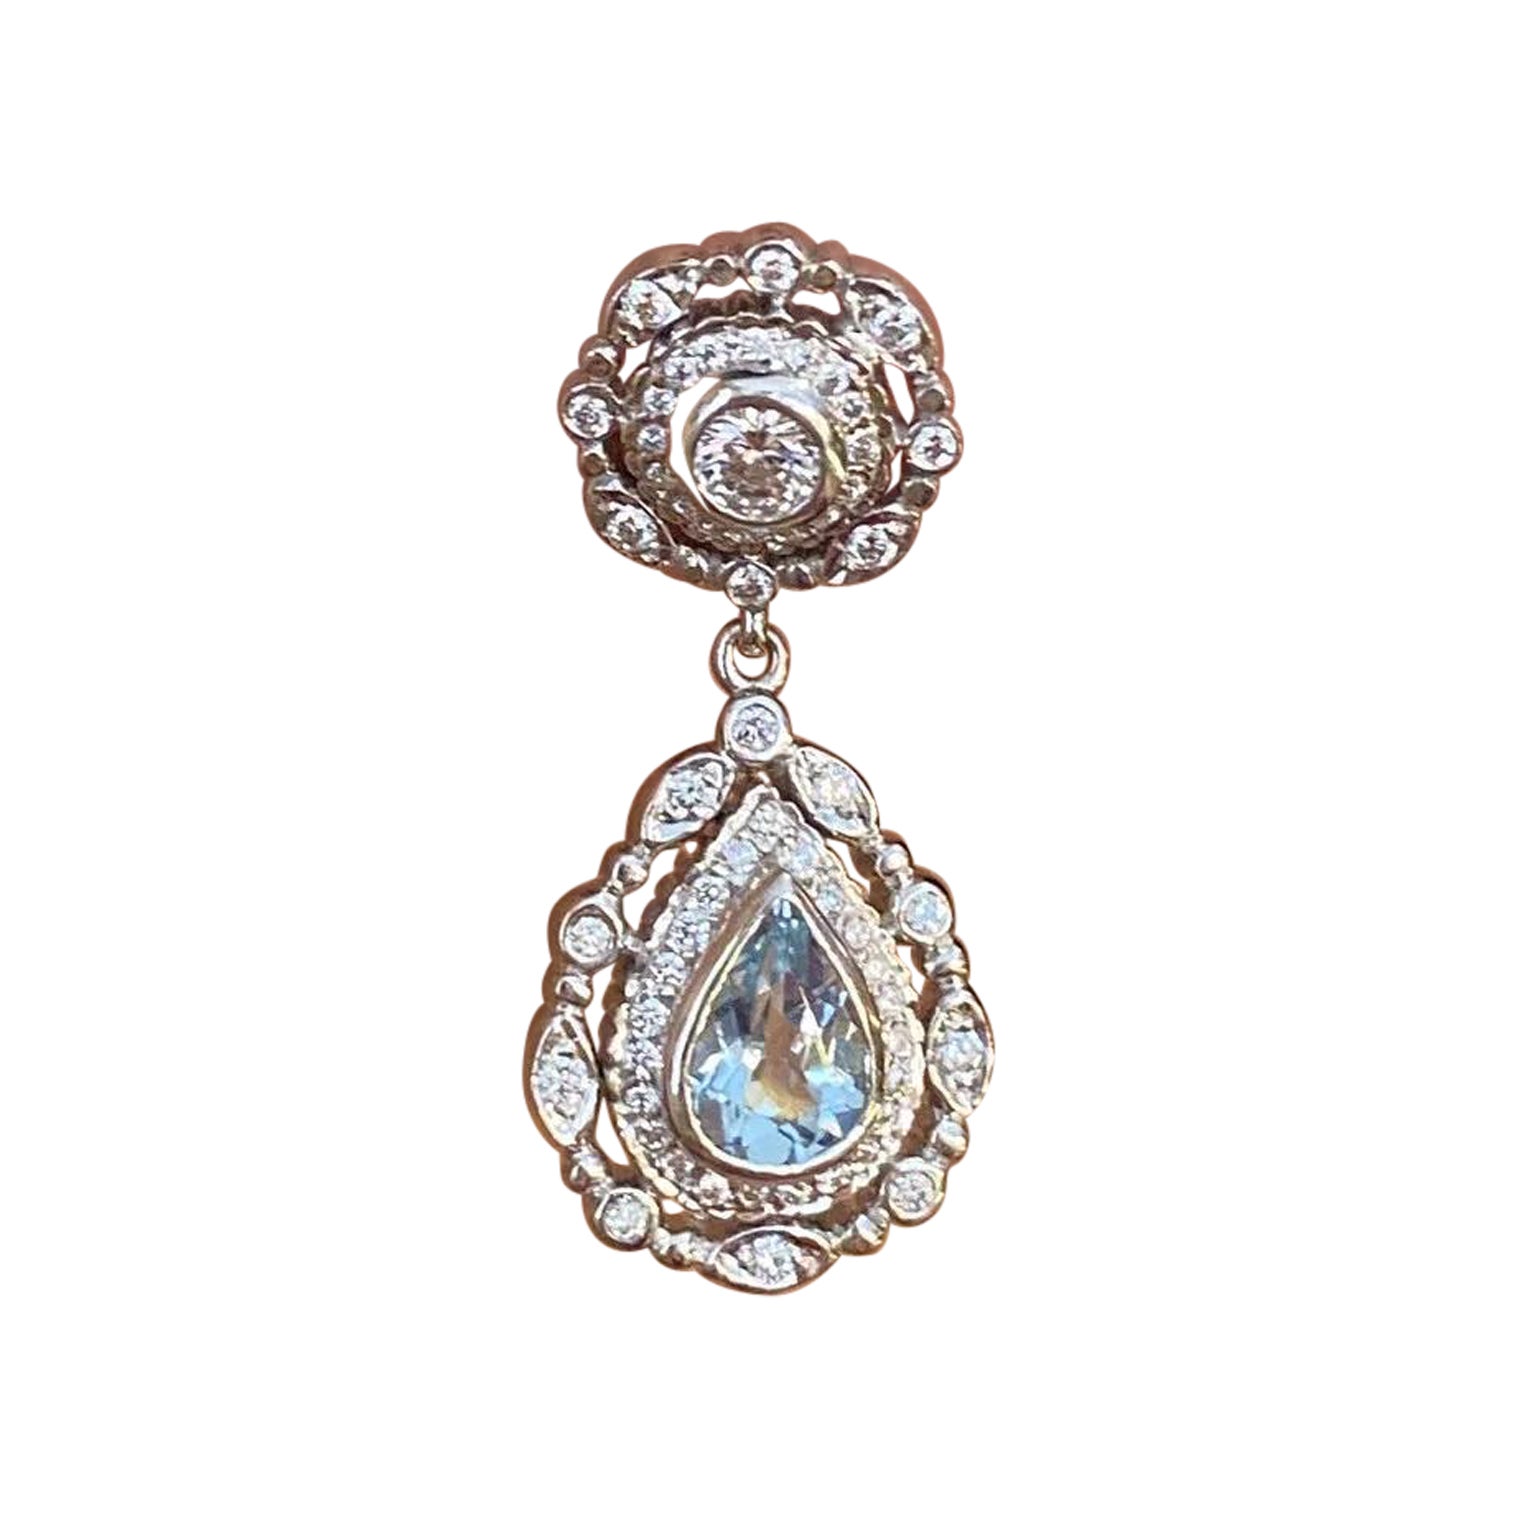 Doris Panos Aquamarine and Diamond Drop Earrings in 18k White Gold